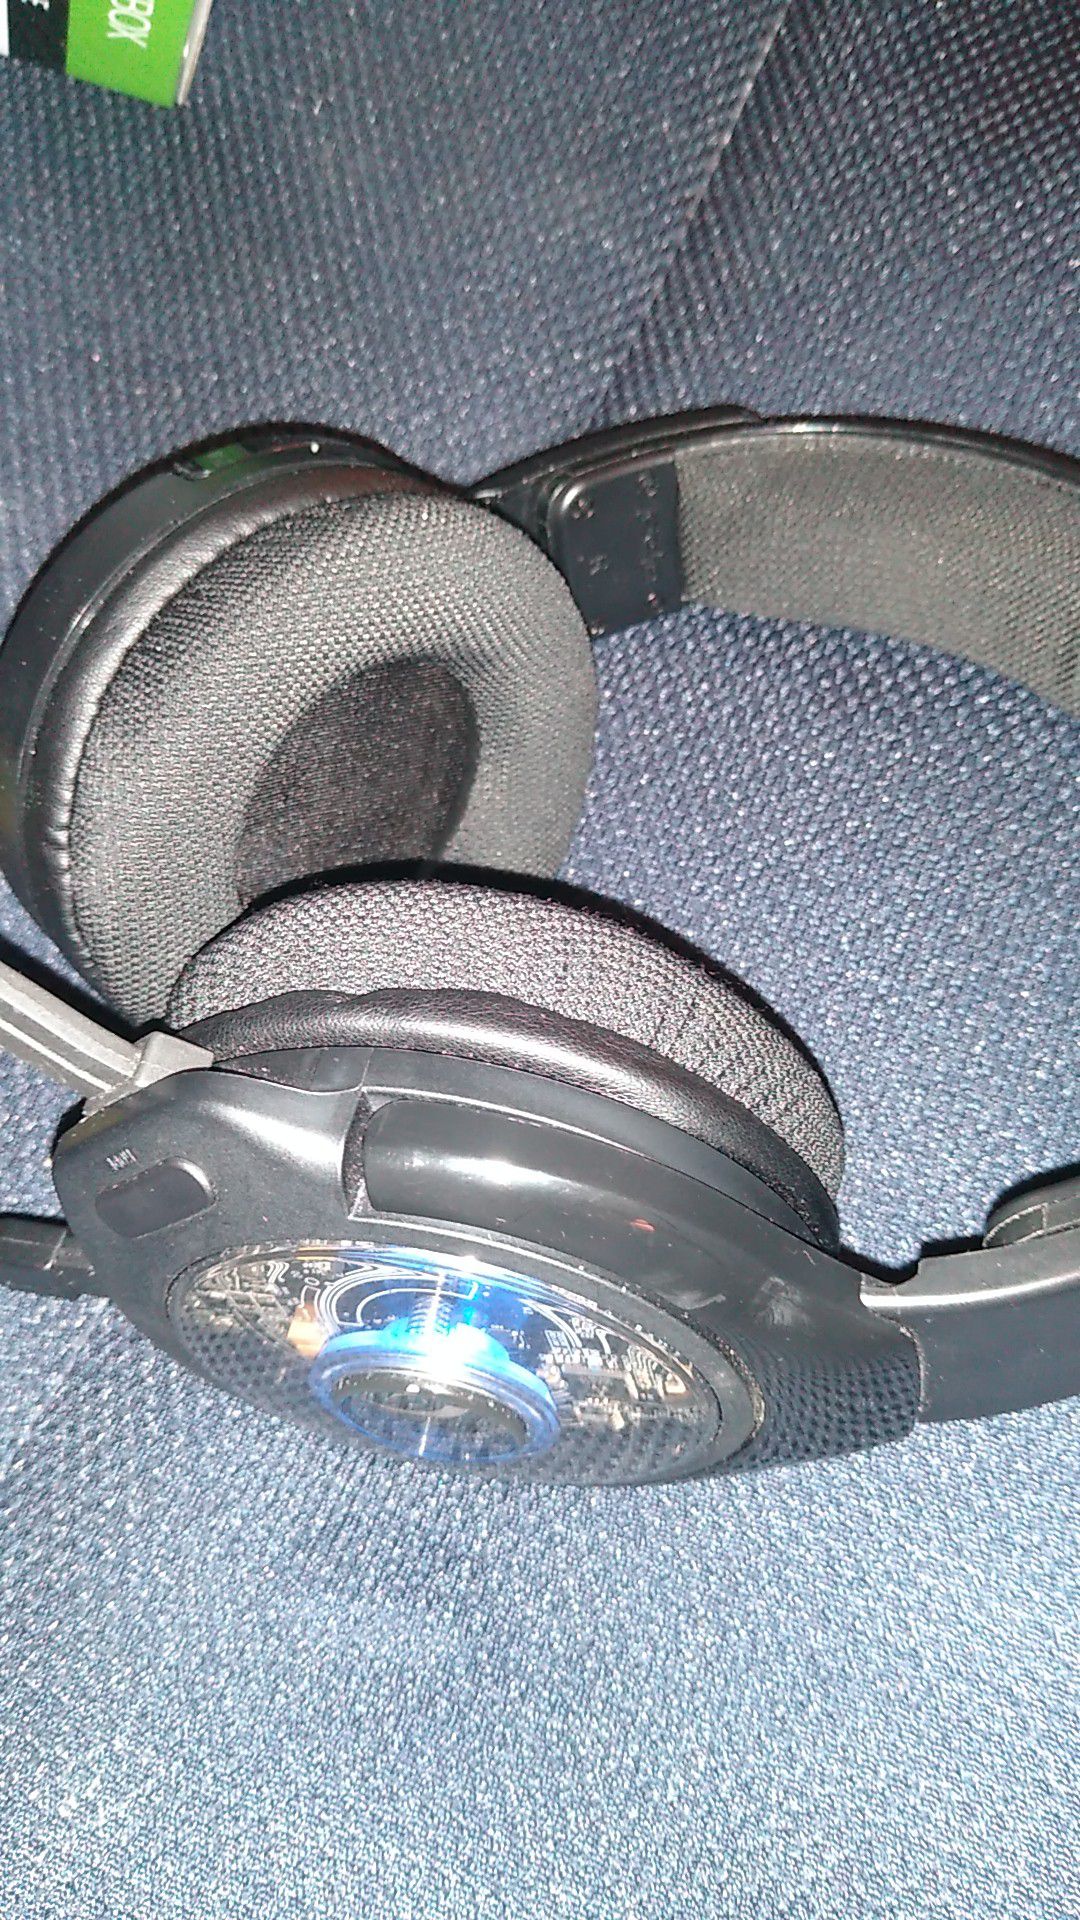 Afterglow AG9+ headphones